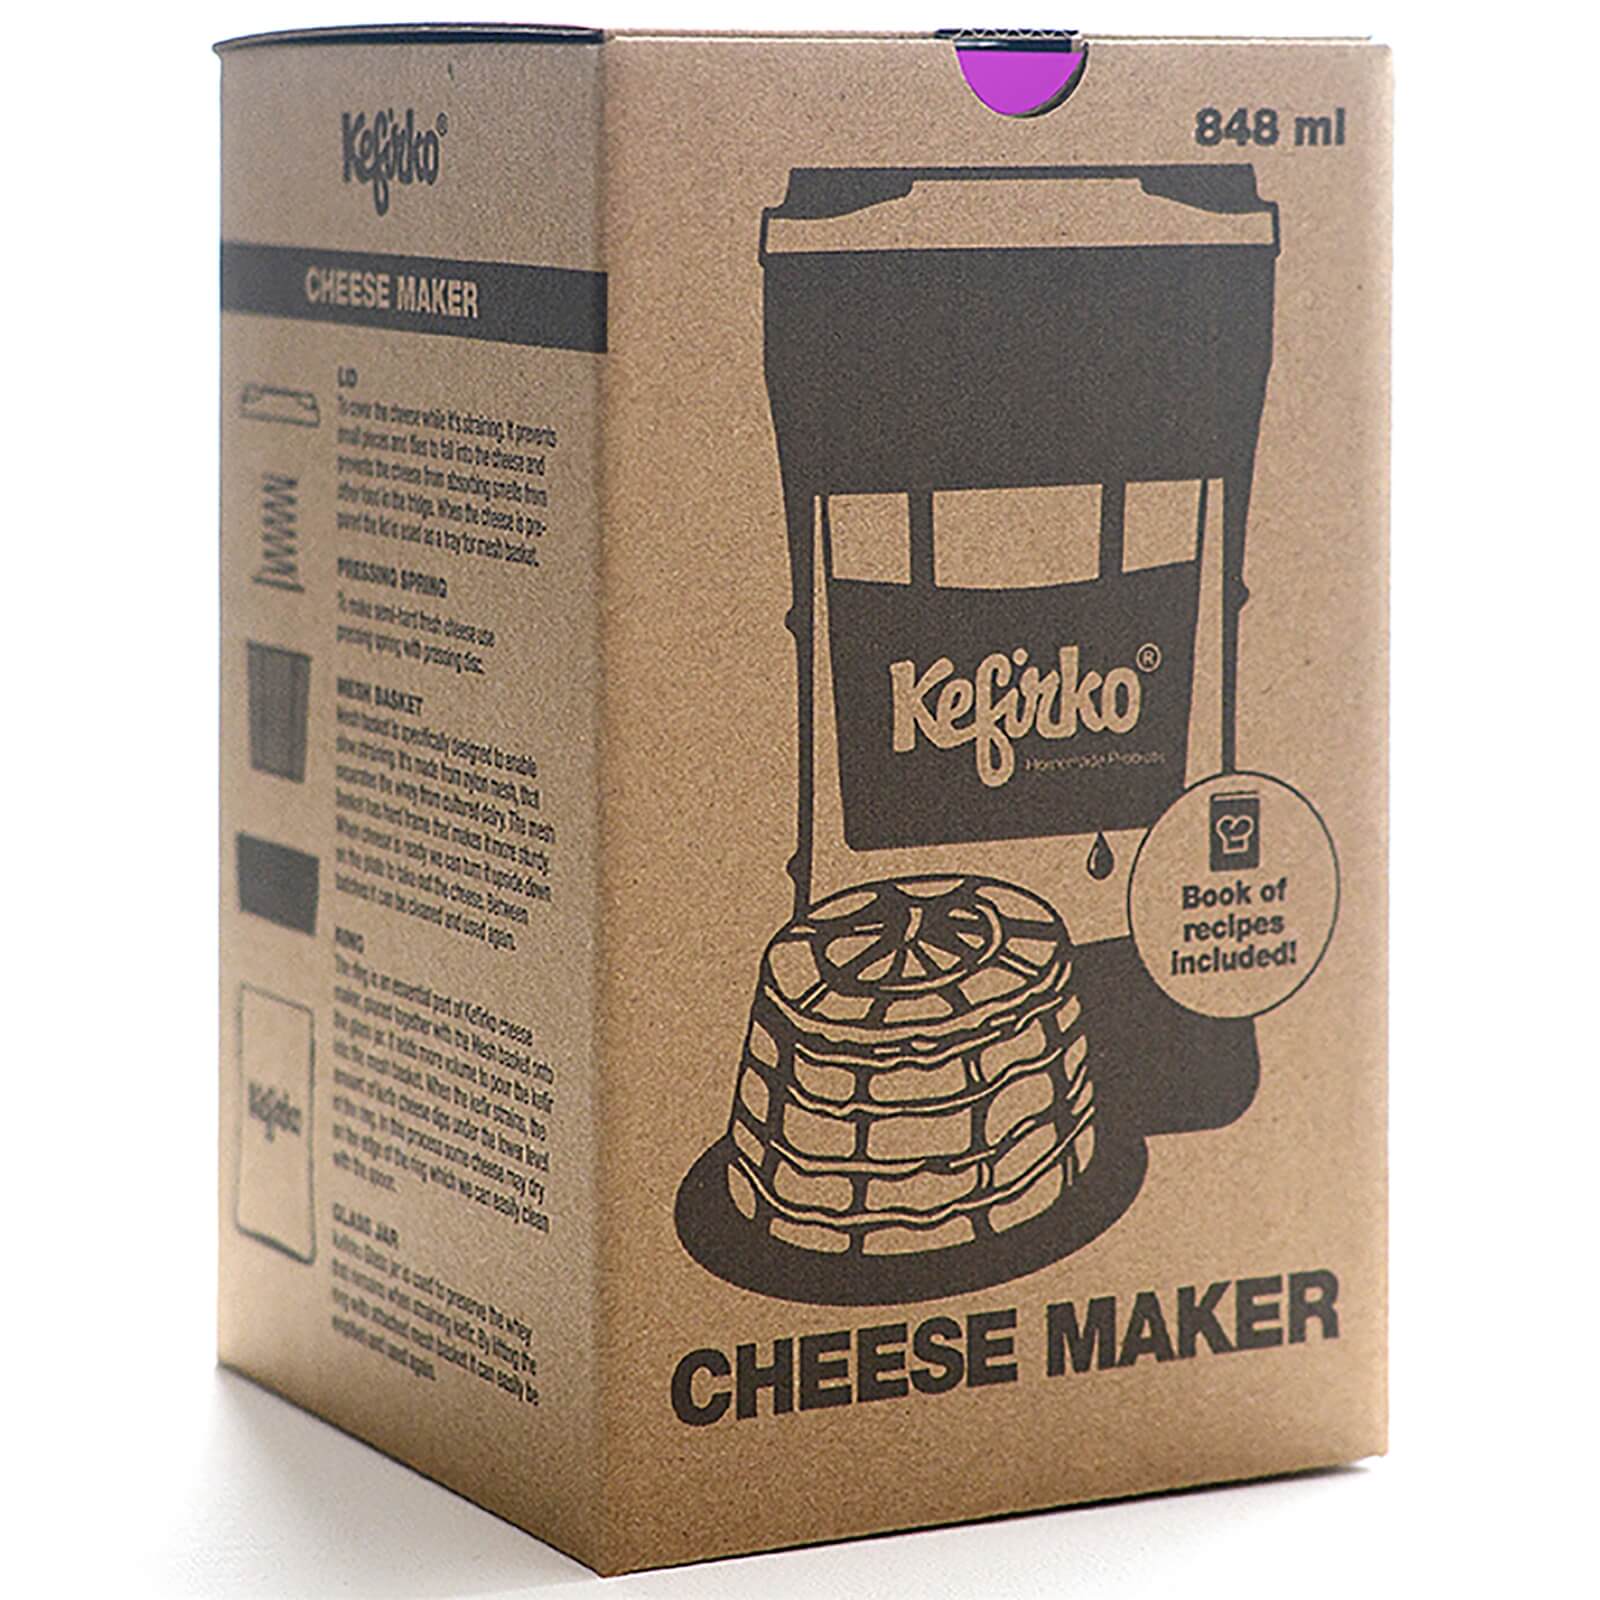 Kefirko Cheese Maker - Gorgeous Gold - 848ml